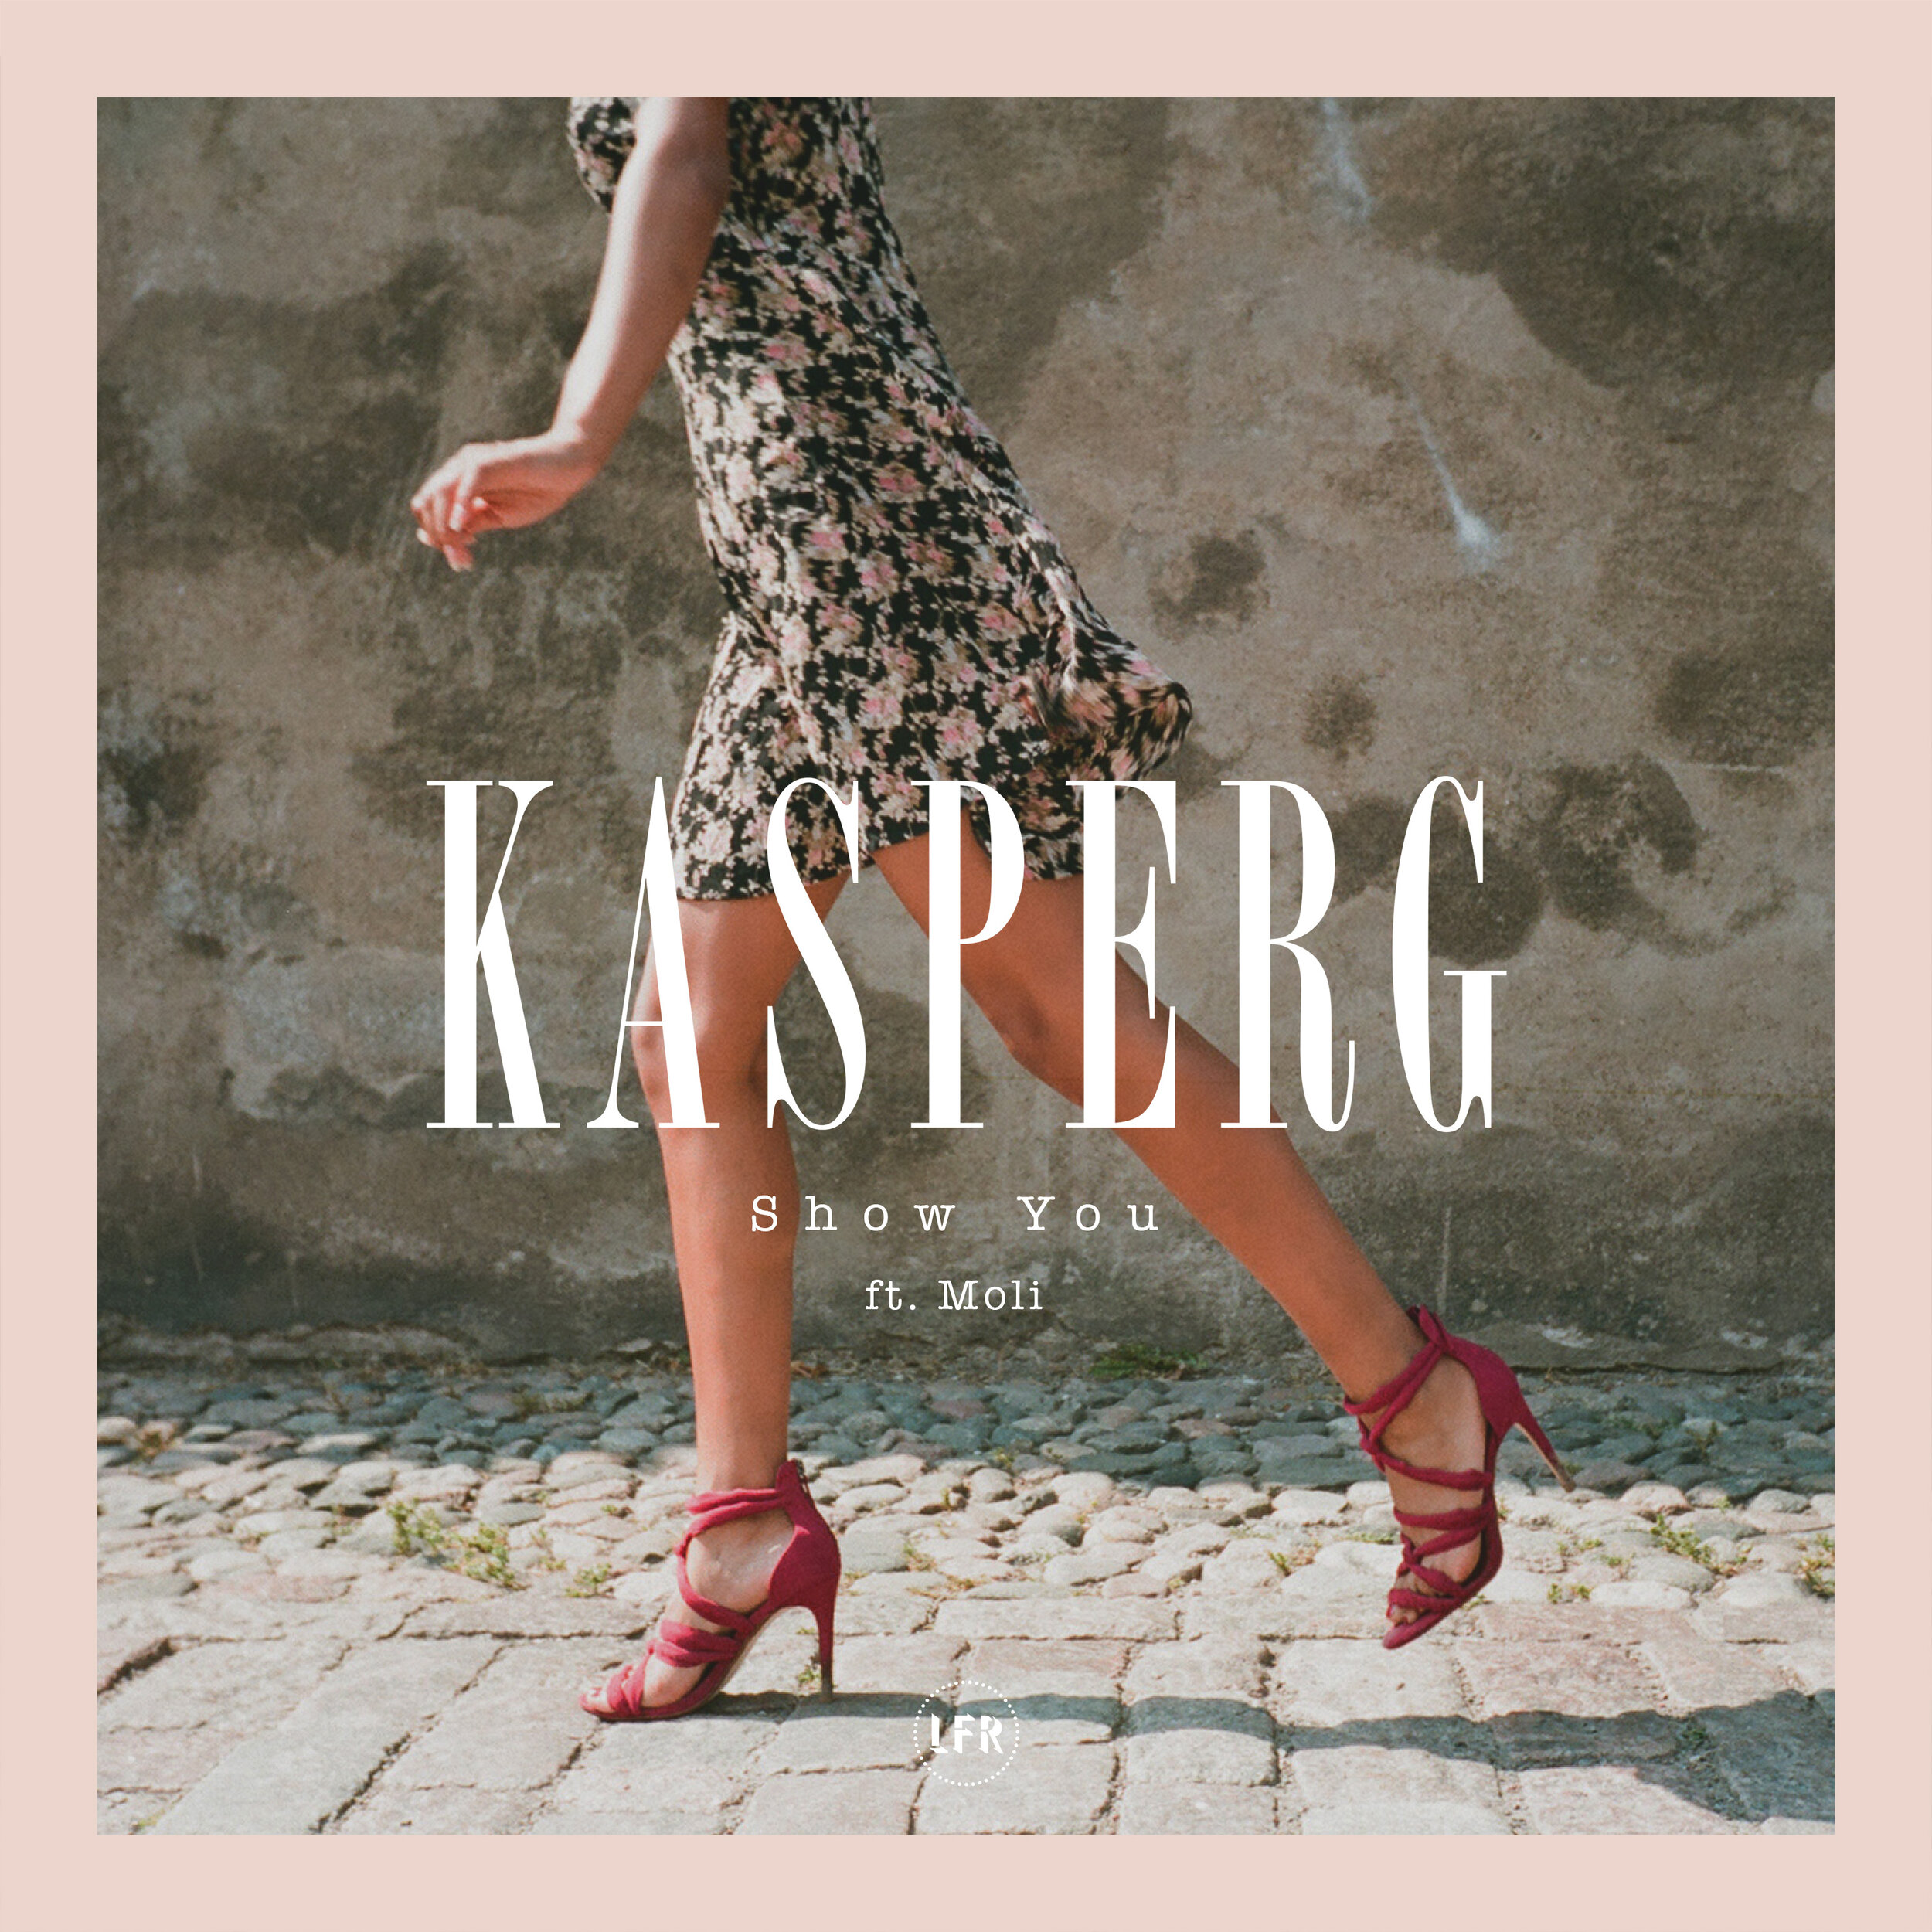  KASPERG - Show You feat. Moli 